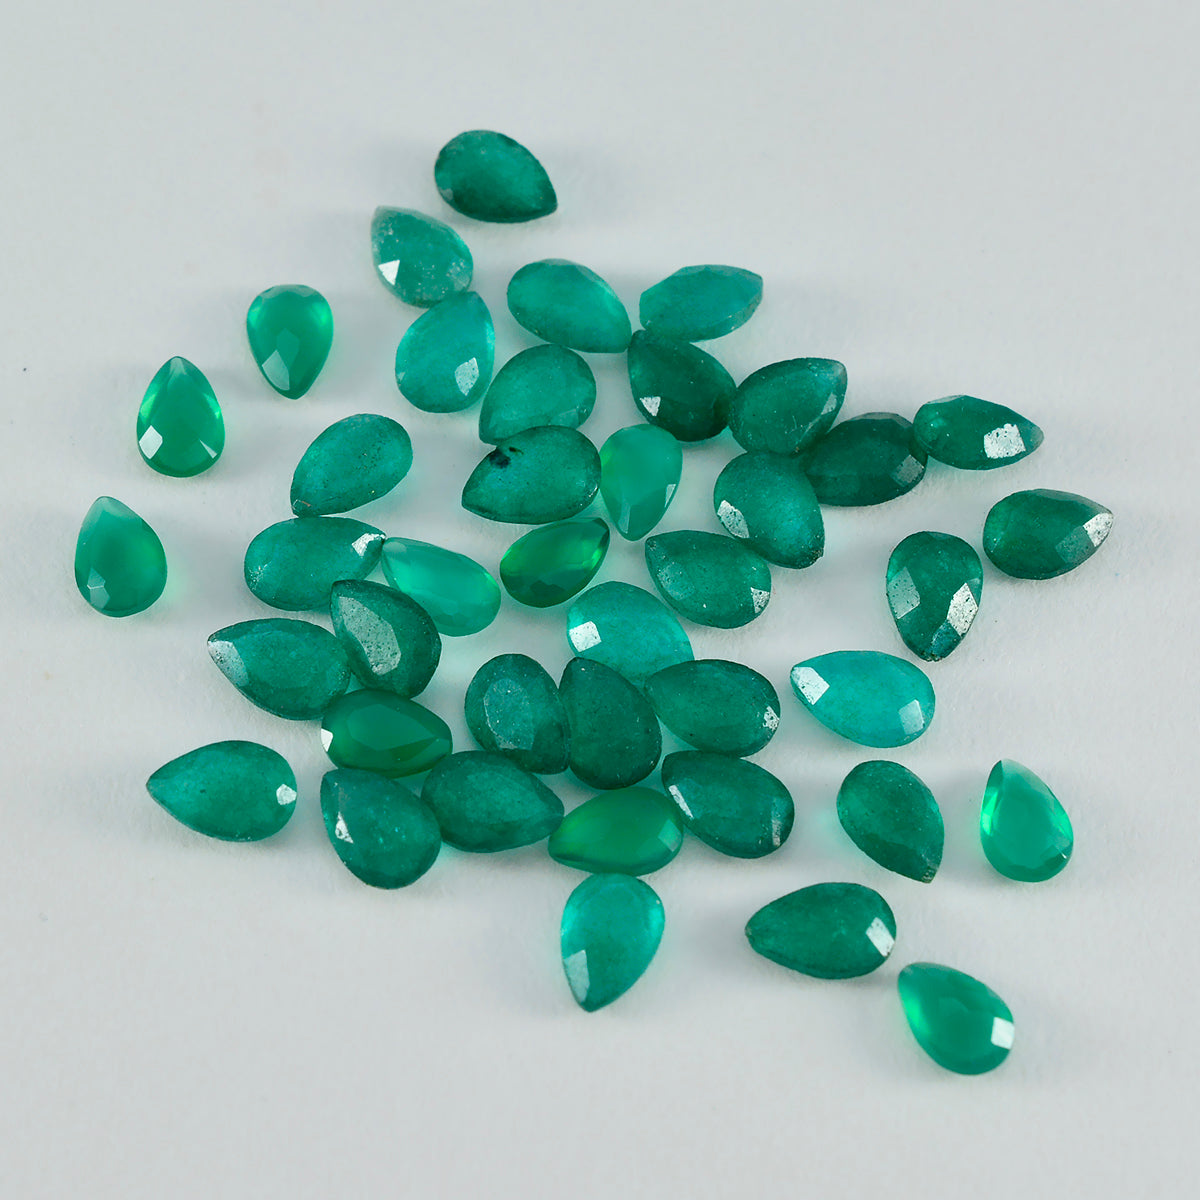 Riyogems 1PC Real Green Jasper Faceted 3x5 mm Pear Shape beauty Quality Loose Gemstone